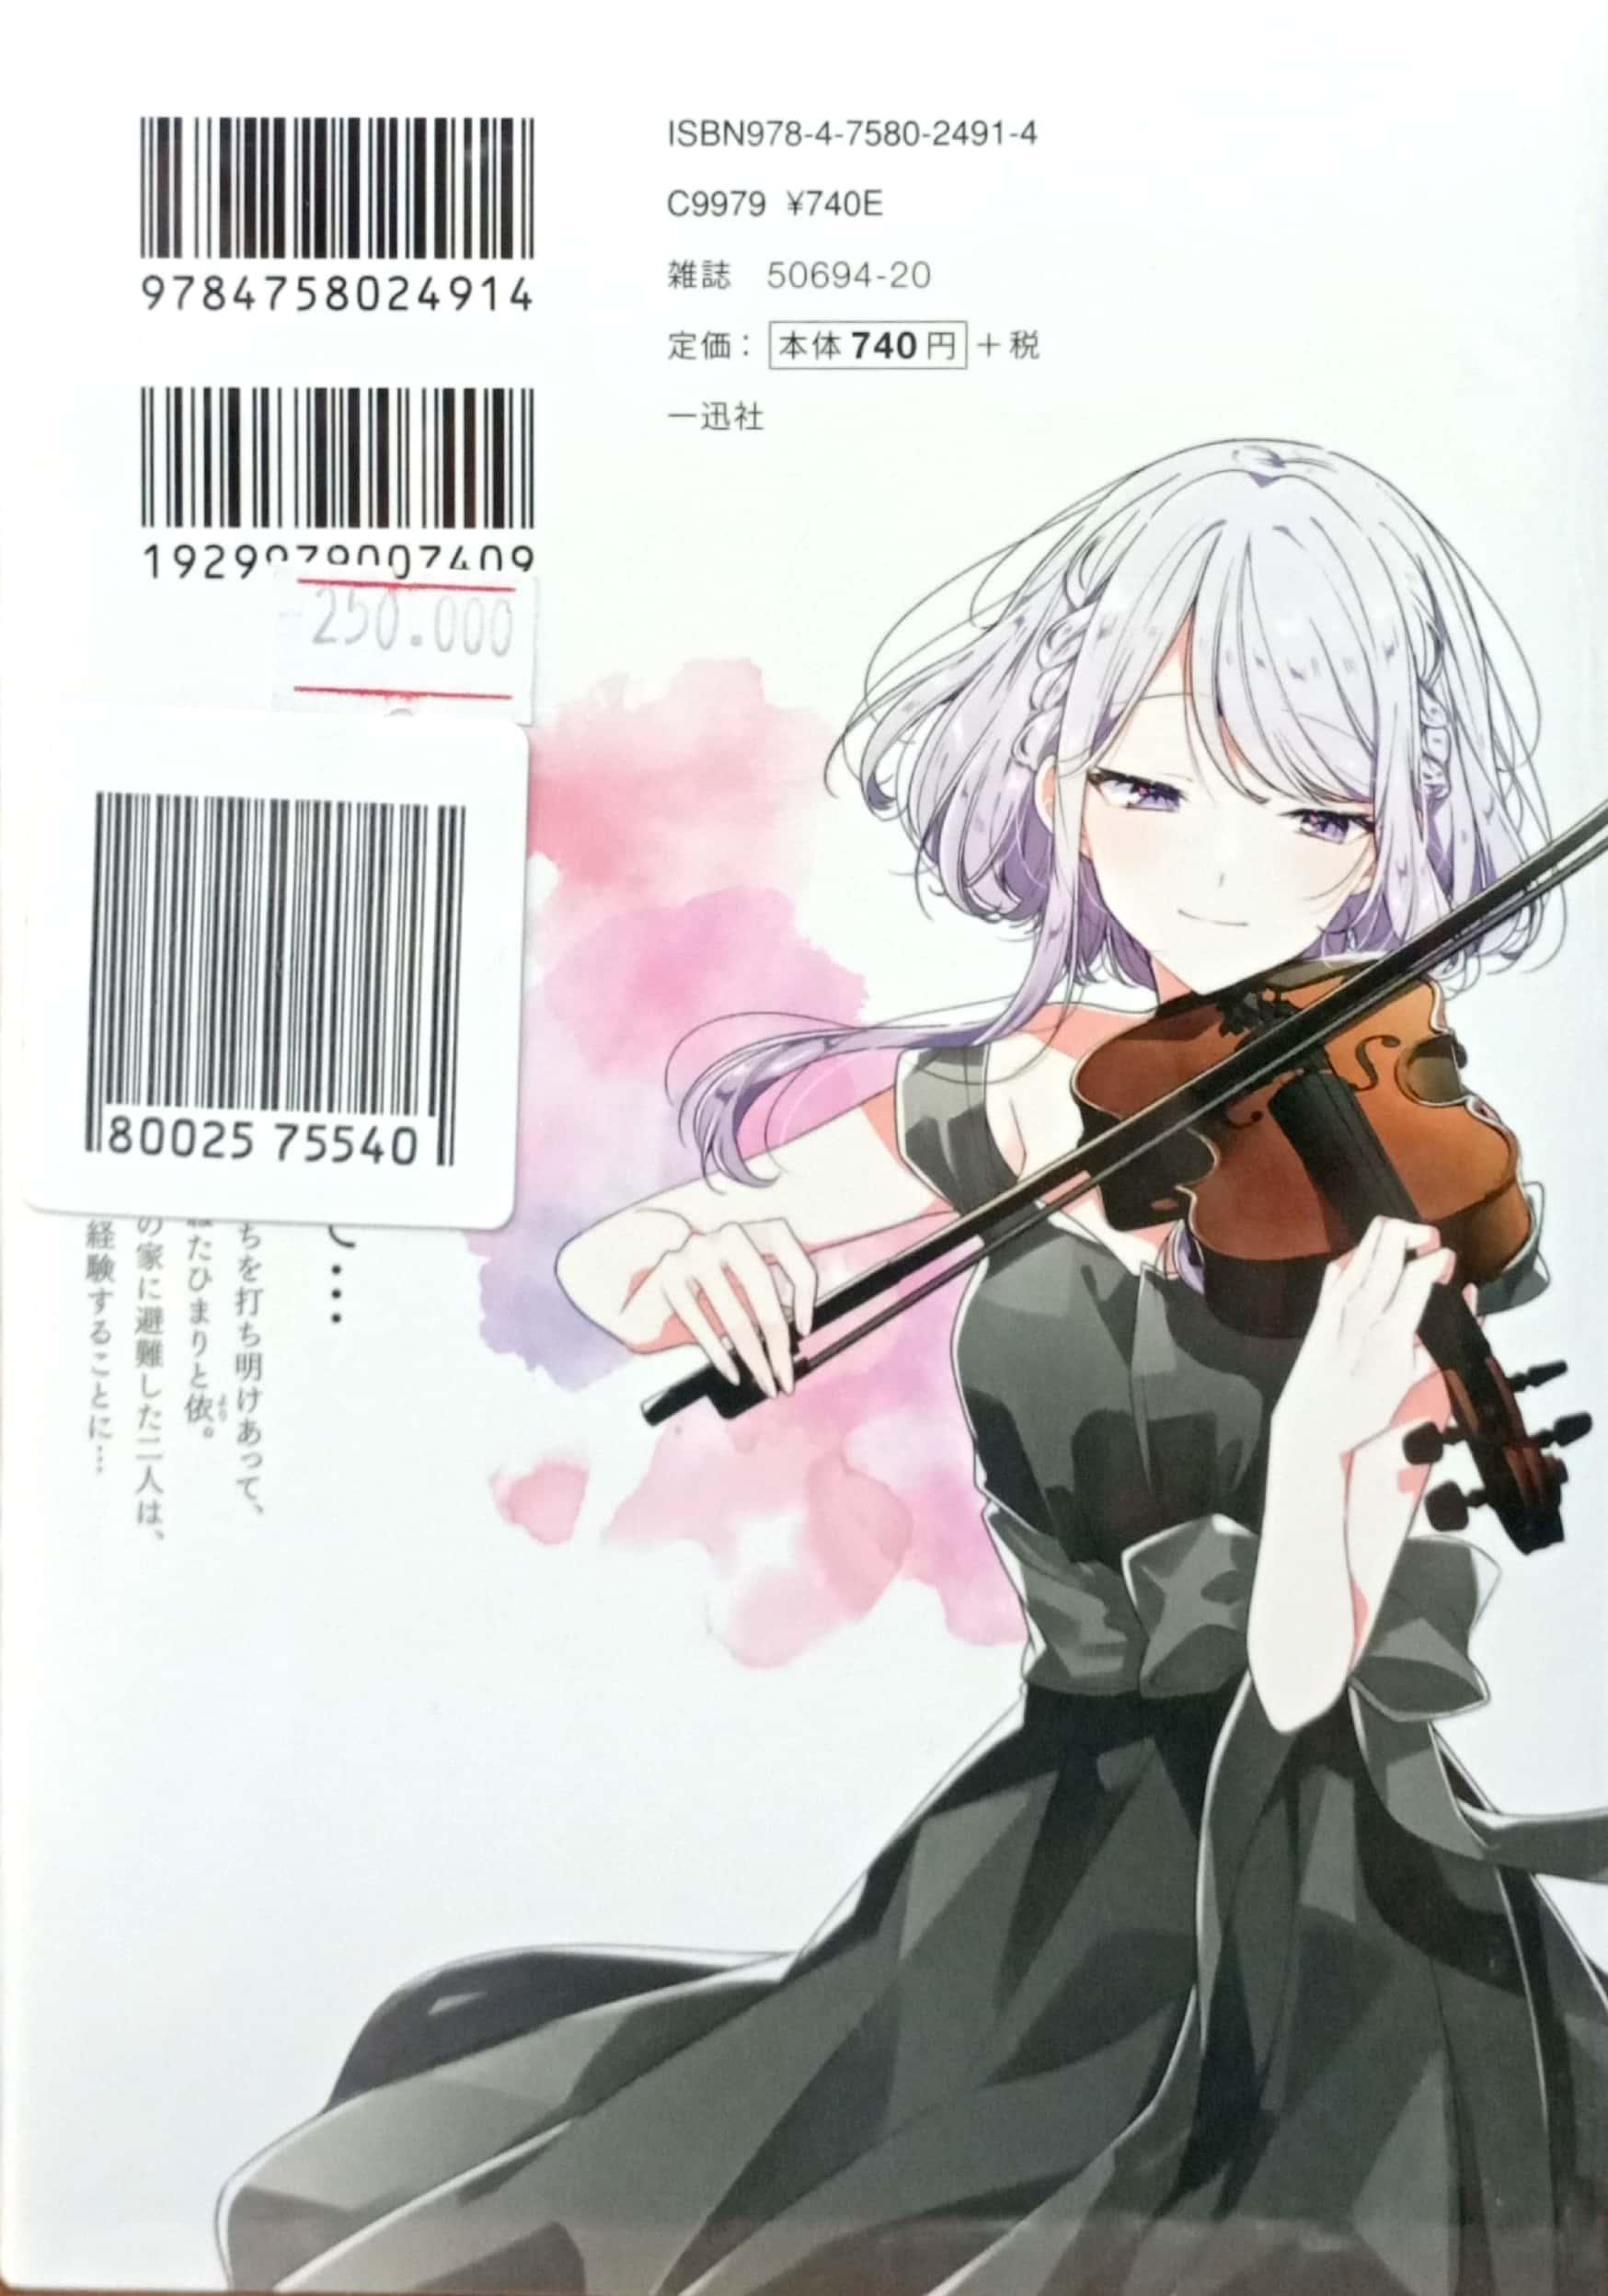 Sasayaku You Ni Koi Wo Utau 7 - Whisper Me A Love Song 7 (Japanese Edition)